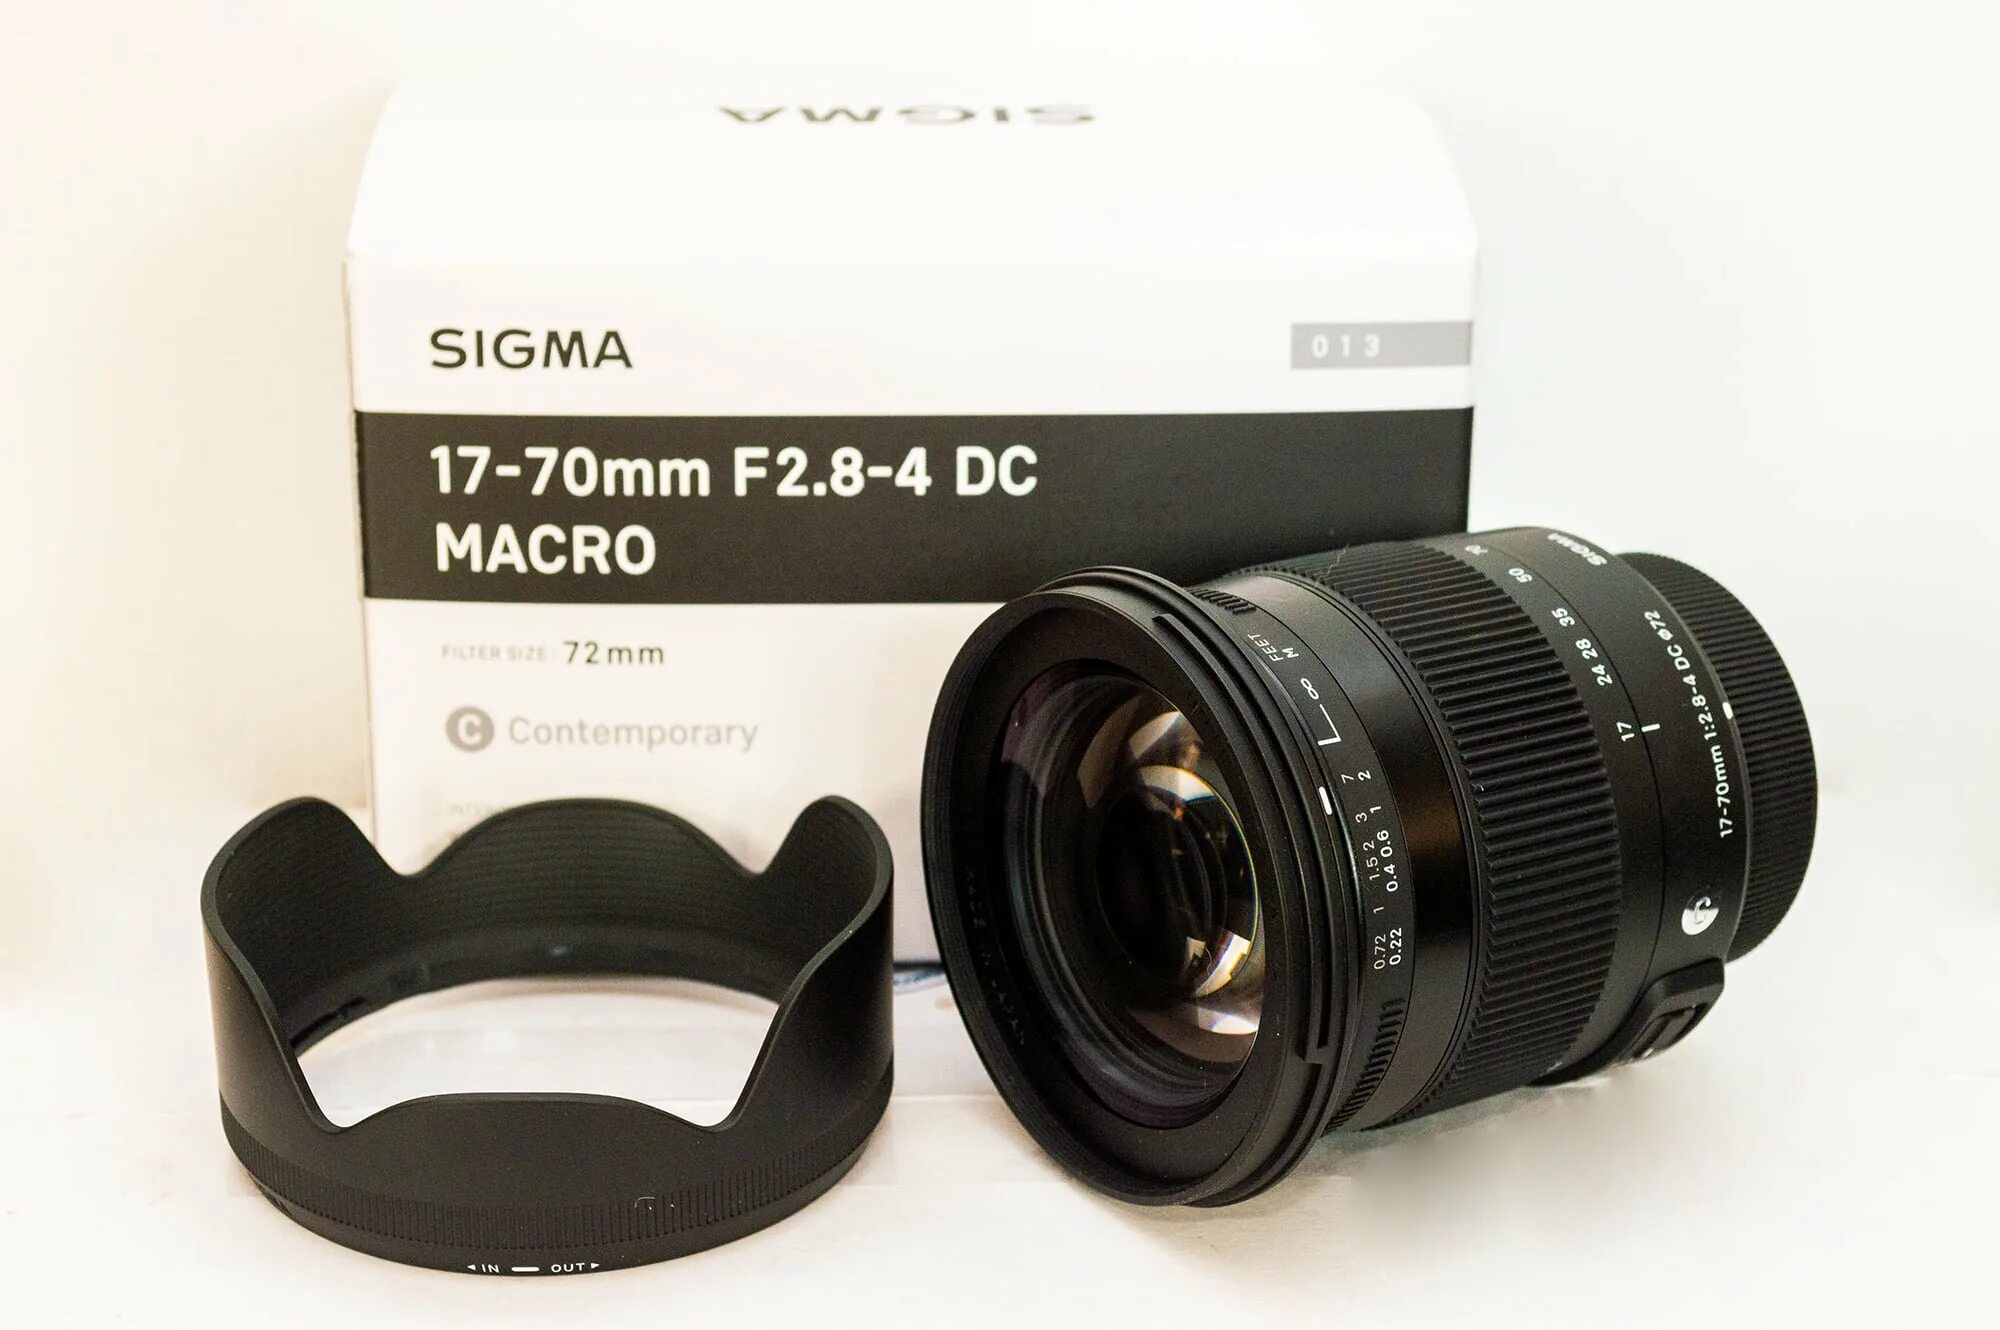 Sigma af 17-70mm f/2.8-4 DC macro os HSM Nikon f. Sigma af 17-70mm f/2.8-4 DC macro os HSM Canon EF-S. Sigma 17-70mm f/2.8-4 DC macro. Sigma 17 70 Canon. Sigma canon купить